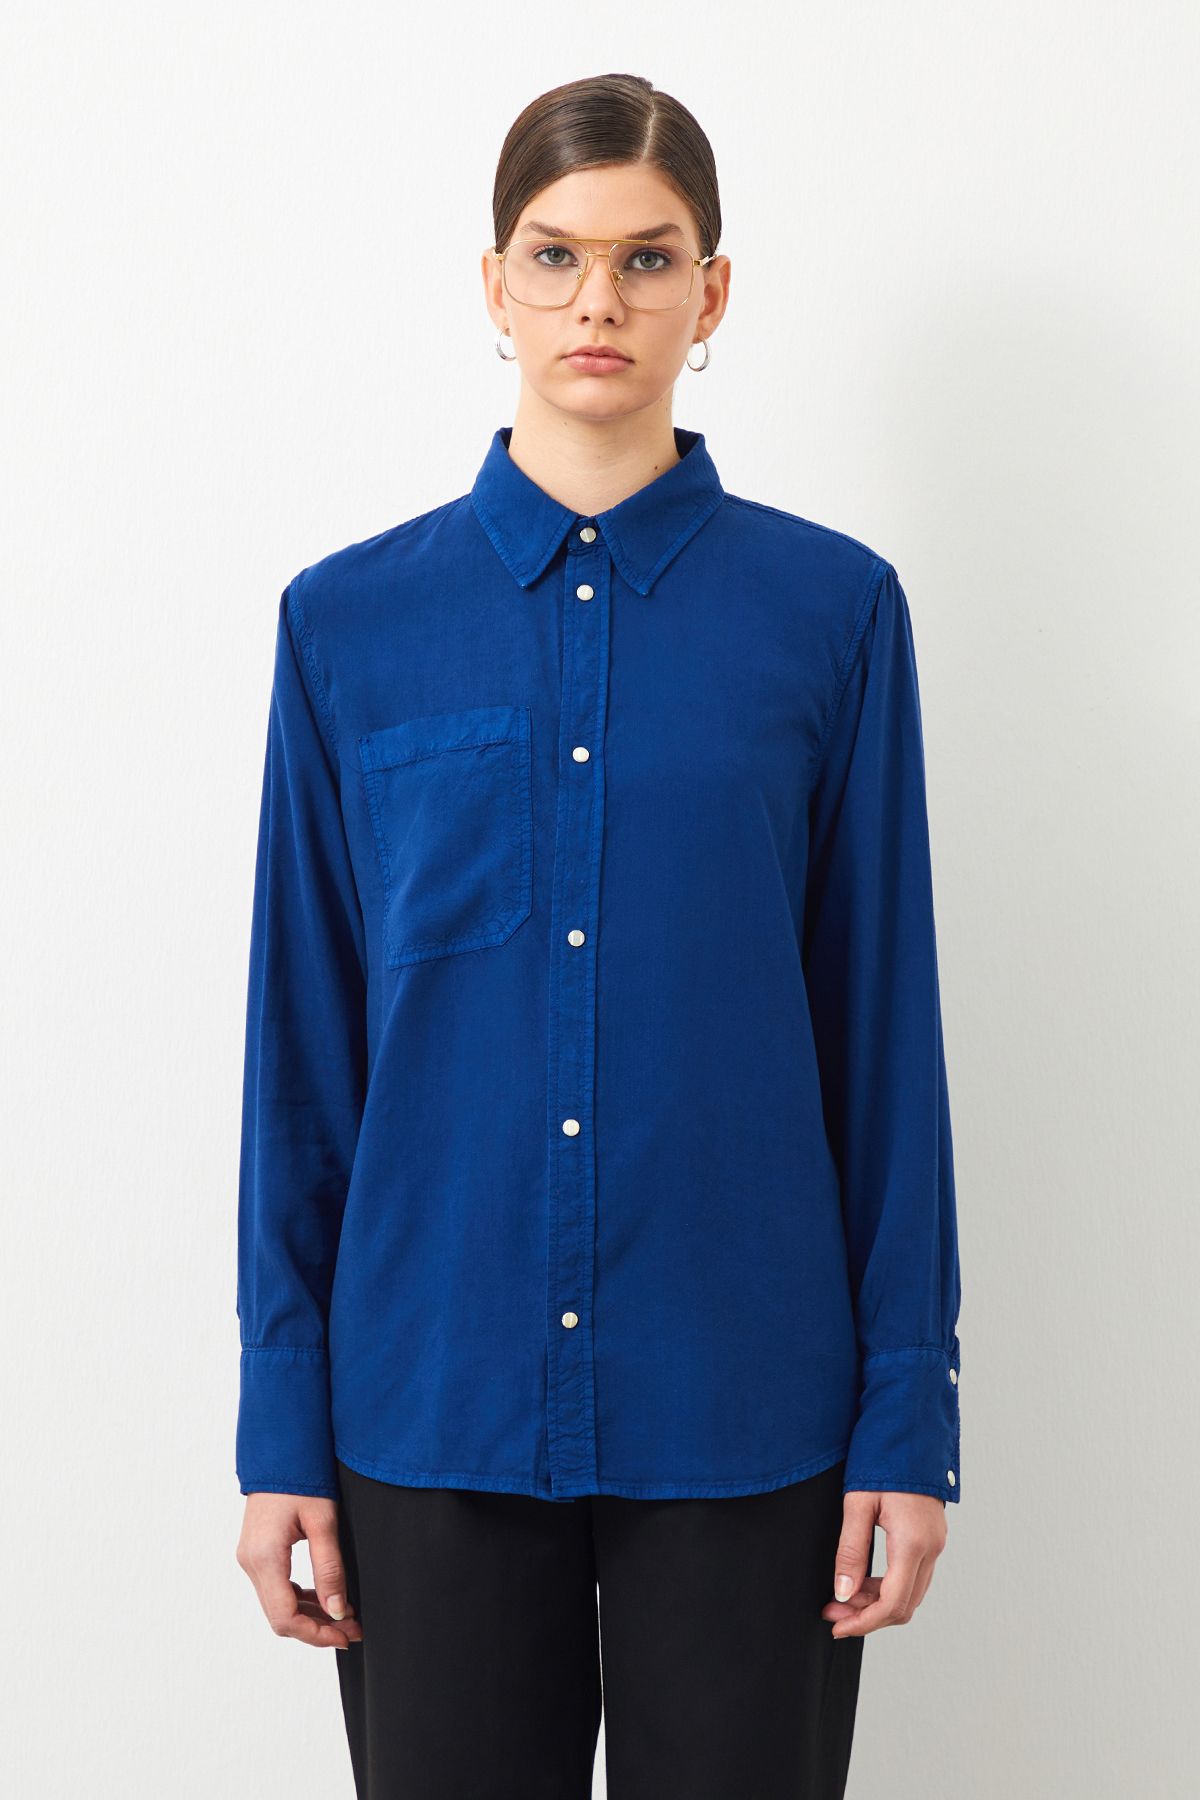 Signy Regular Fit Navy Blue Women's Tencel Shirt